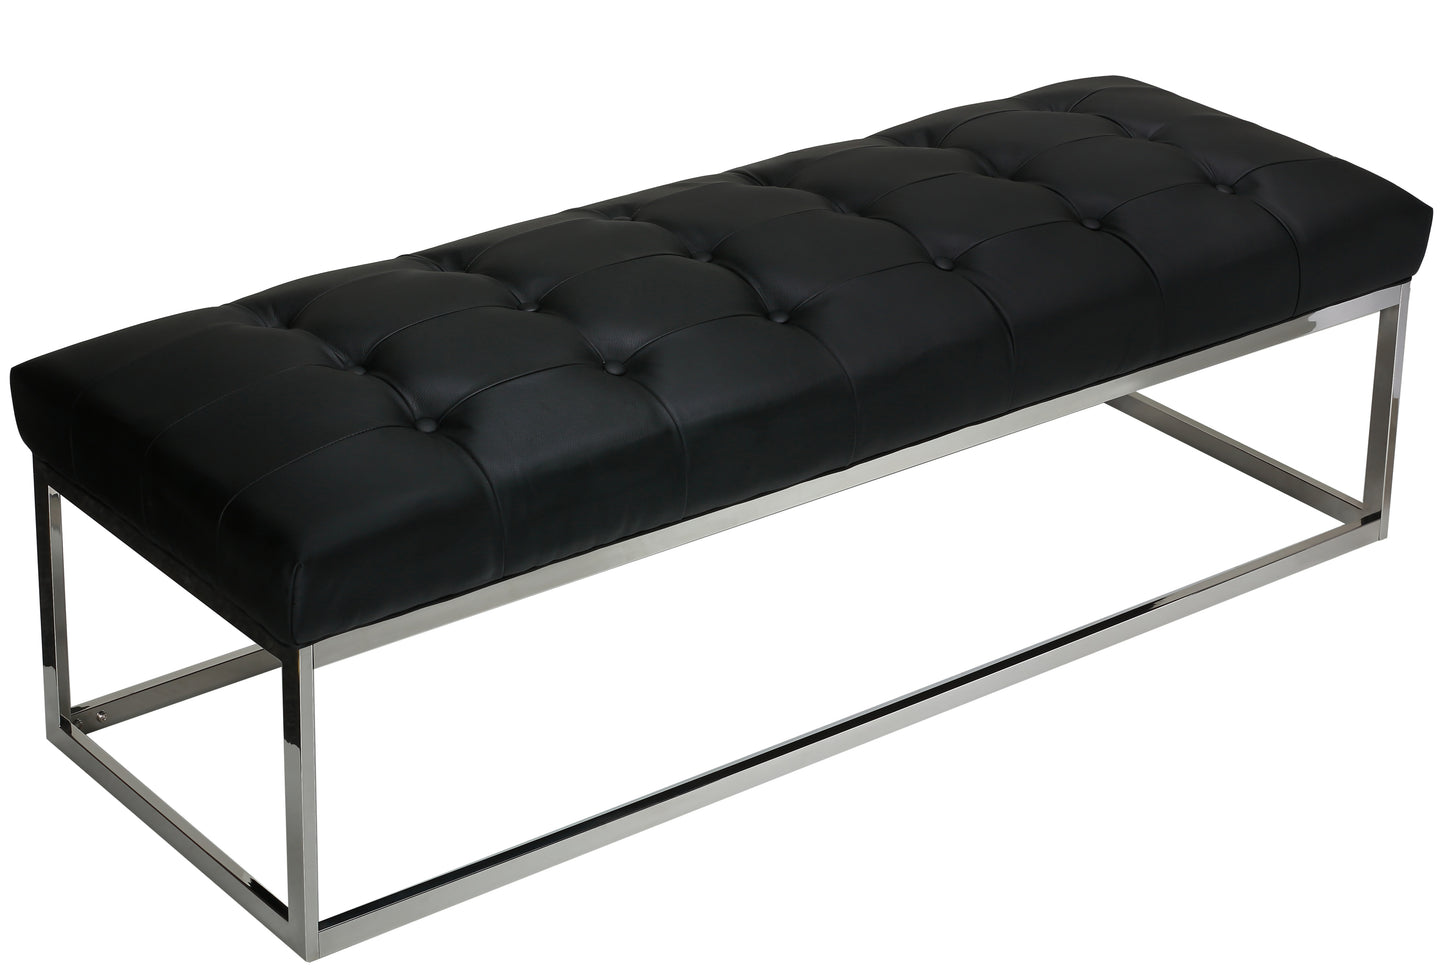 Cortesi Home Biago Contemporary Oversized Tufted Long Bench, Black Leather Like Vinyl